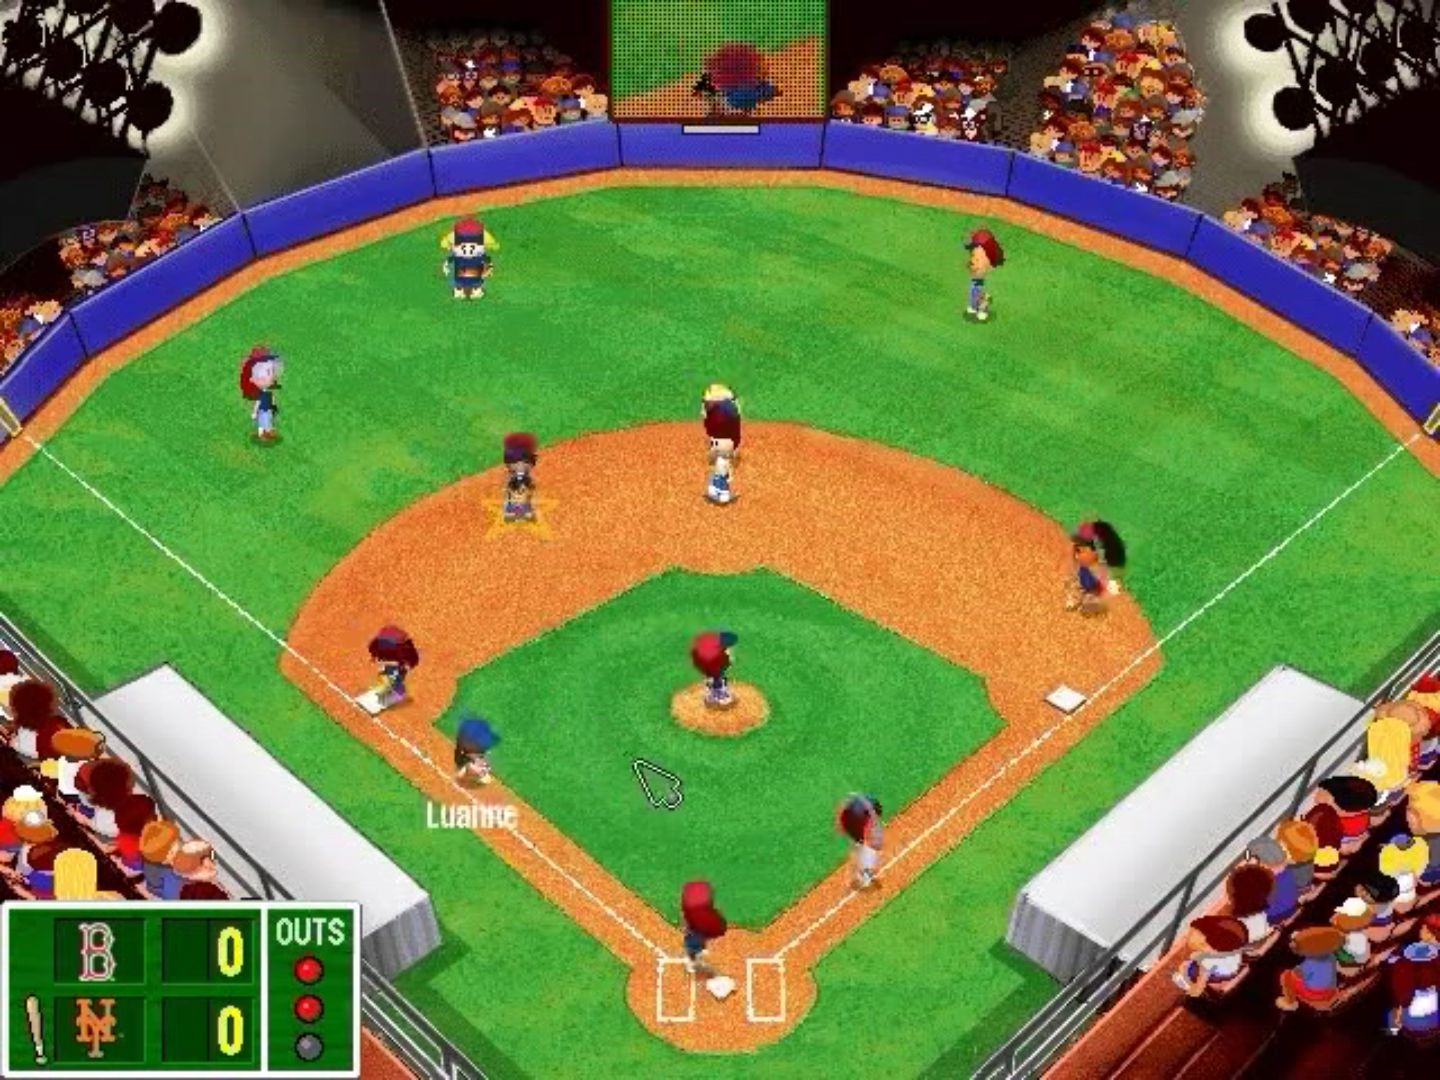 backyard baseball 2003 macbook pro download